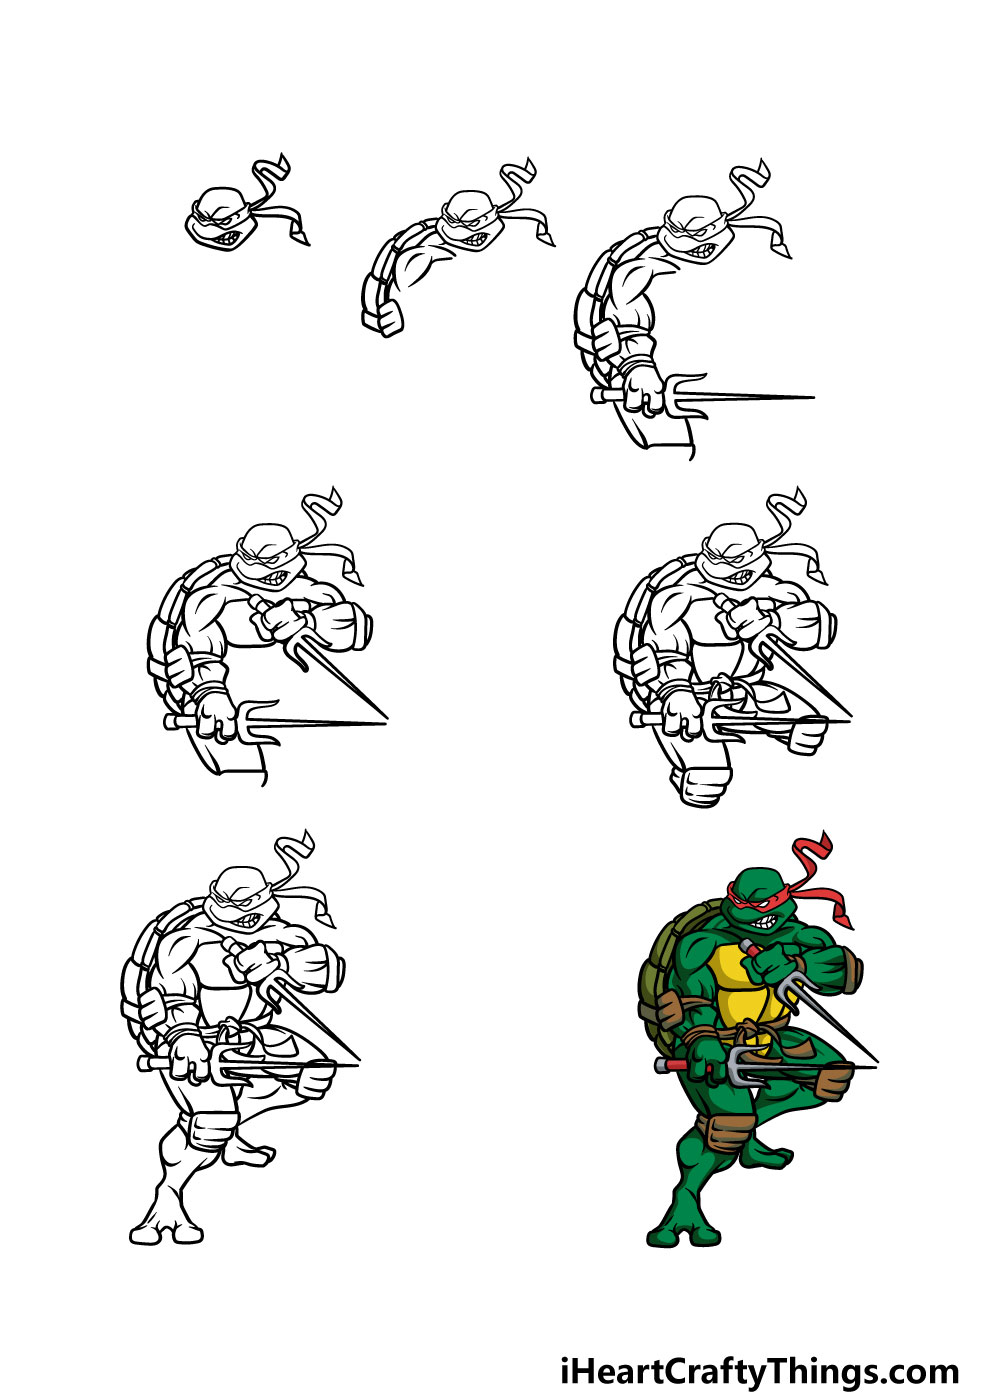 how to draw ninja turtles in 7 steps